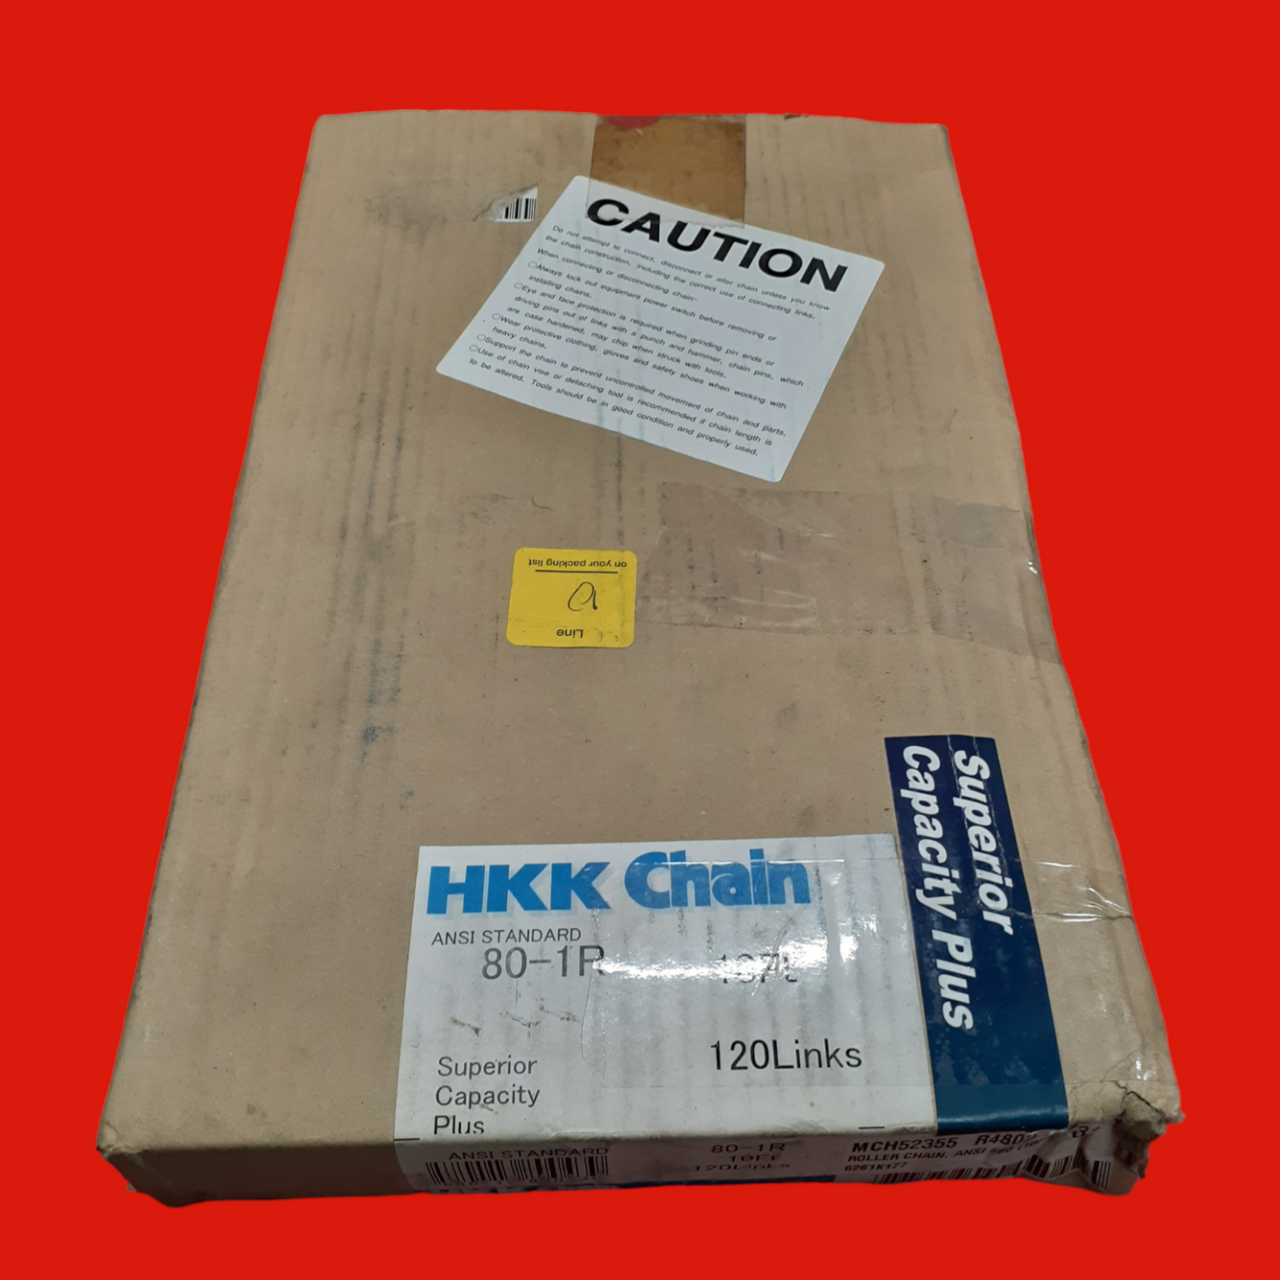 HKK Chain 80-1R, 10ft, 120 Links Superior Capacity